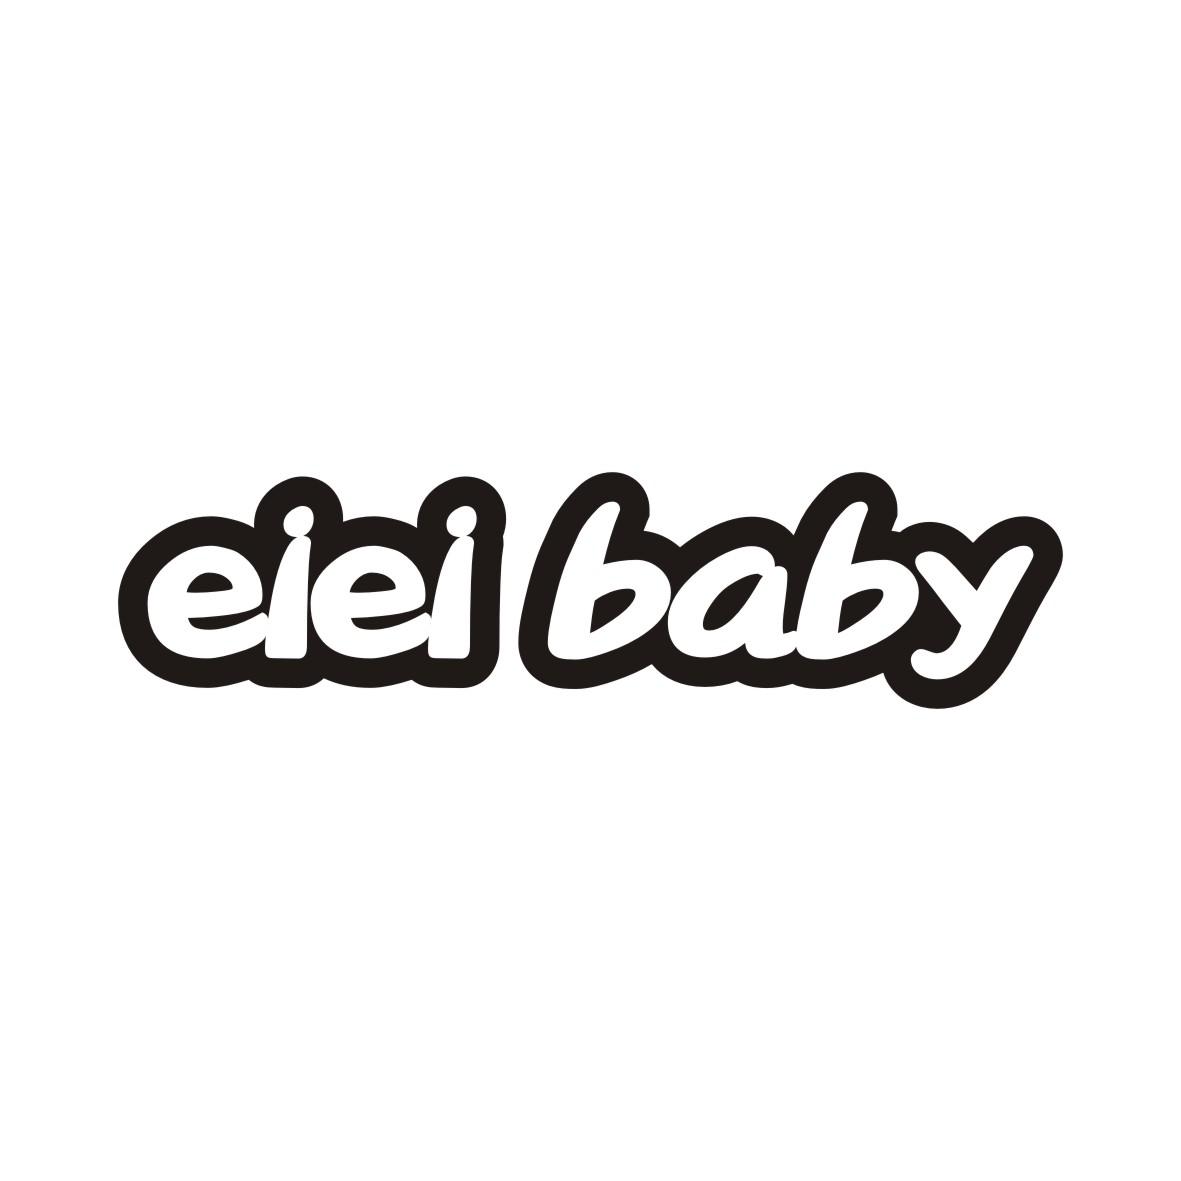 EIEI BABY商标转让